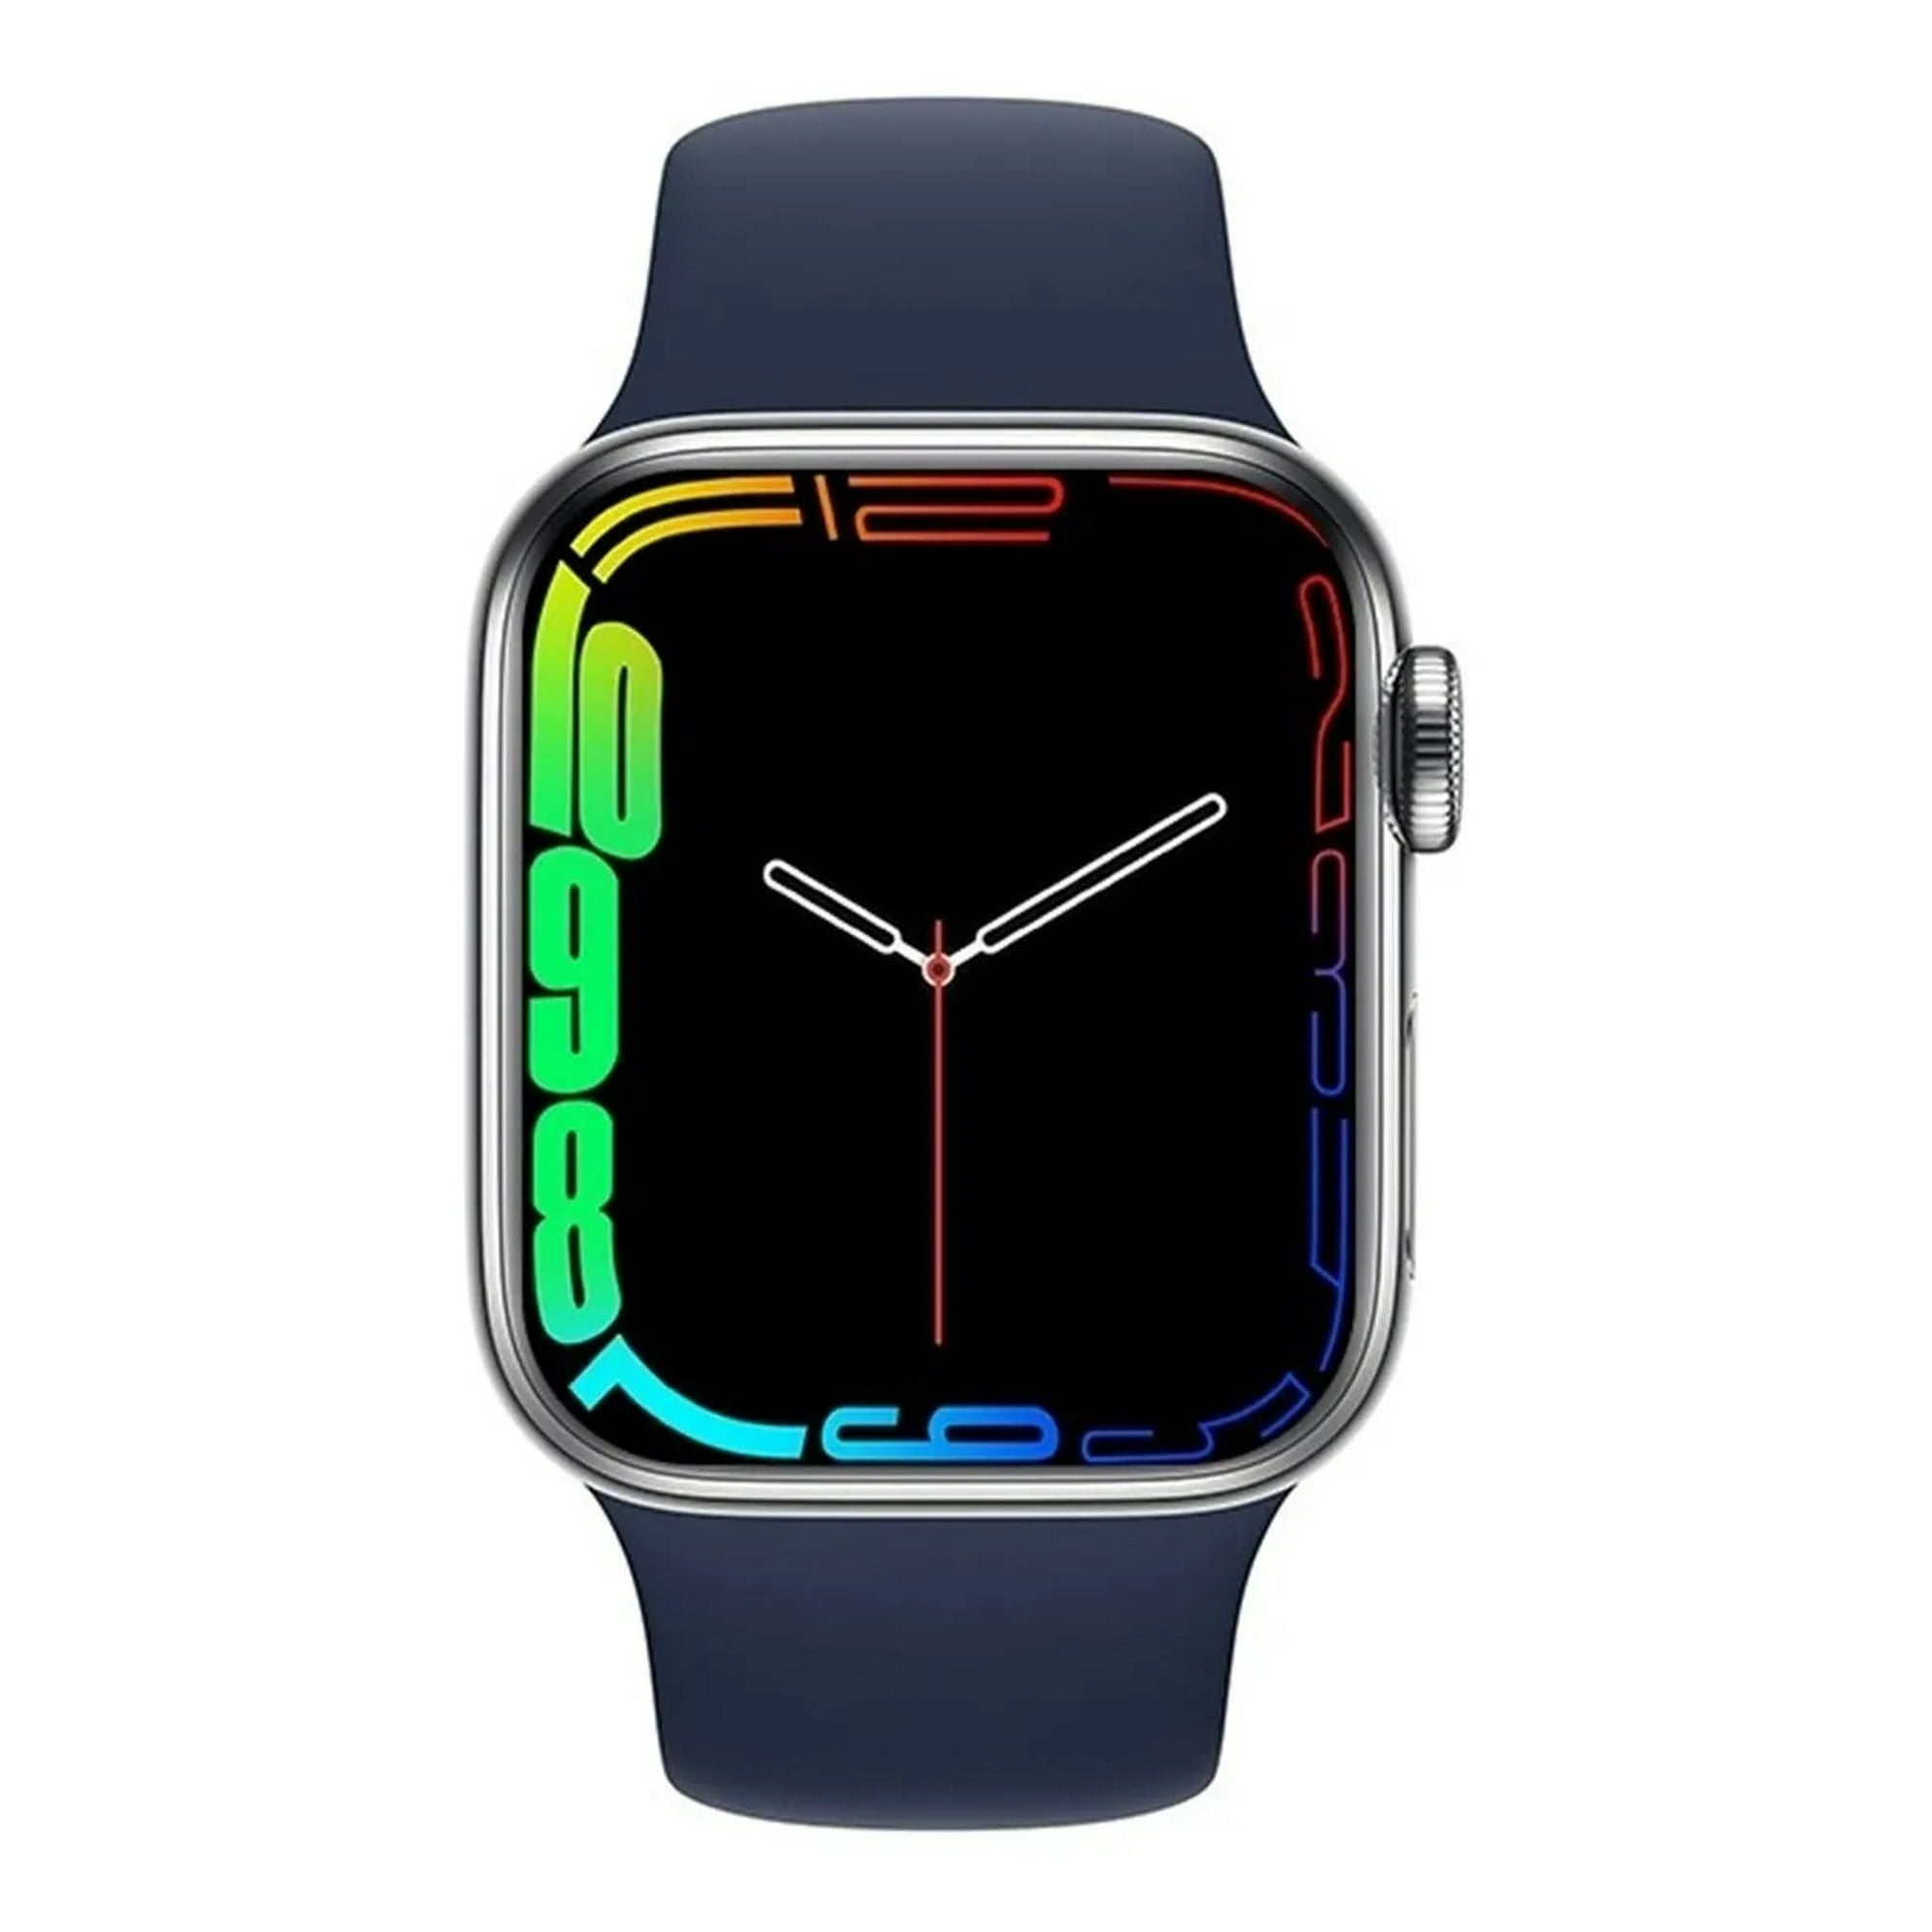 Fralugio smart watch reloj inteligente t700 pro max hd nfc azul fralugio lujo